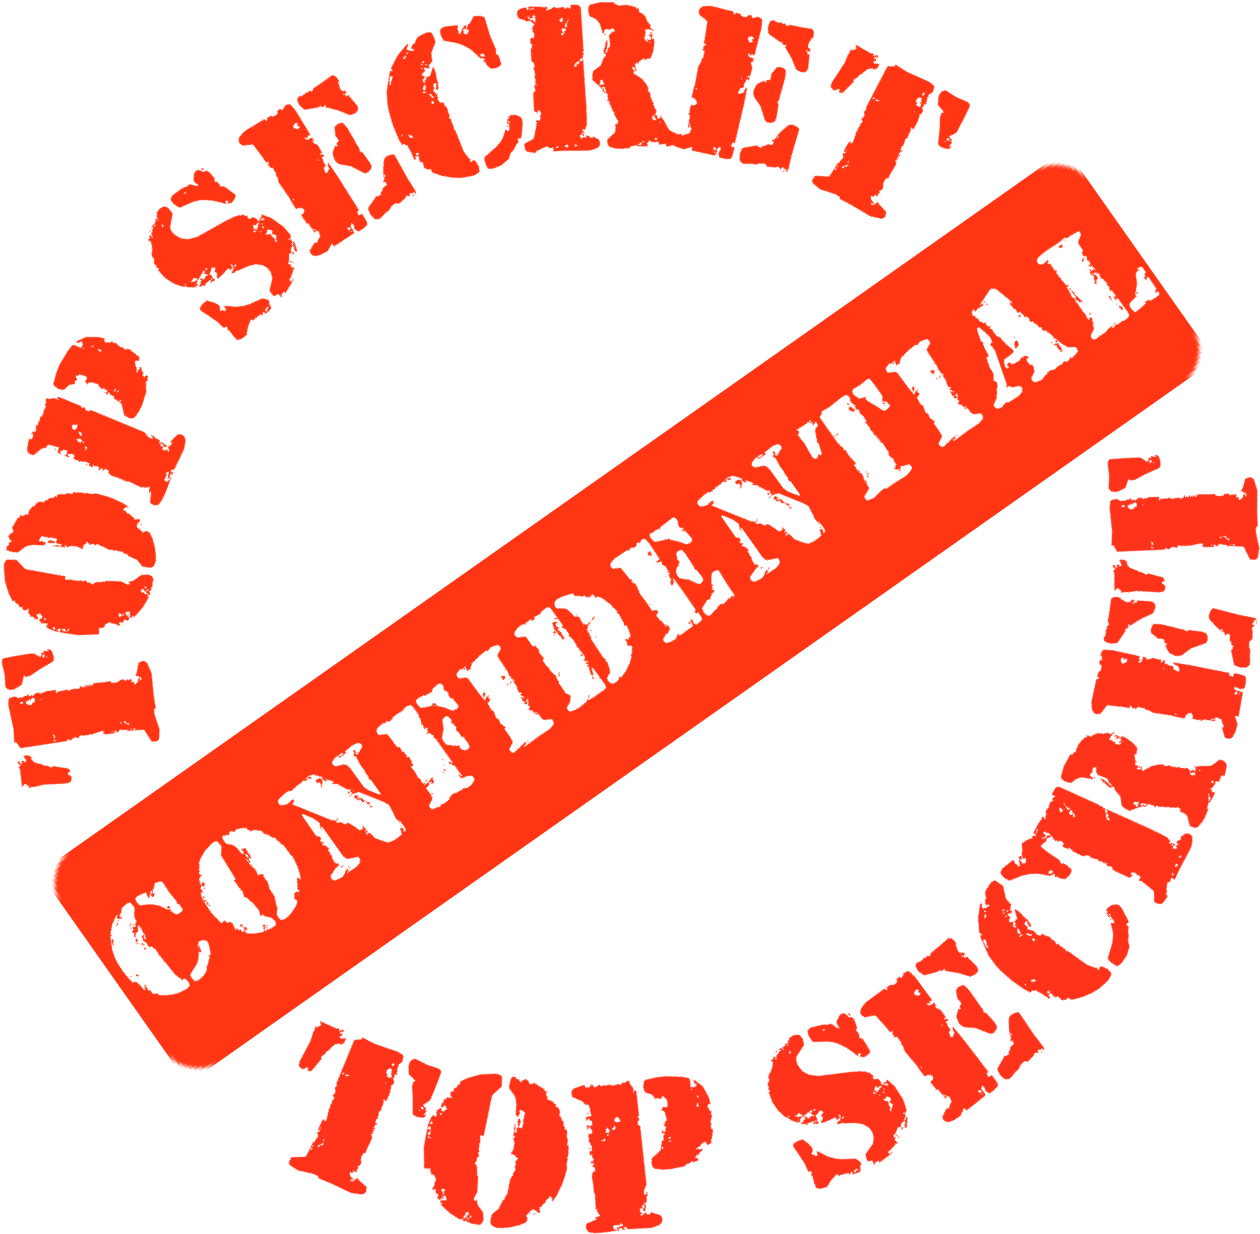 Top Secret Confidential Stamp PNG image